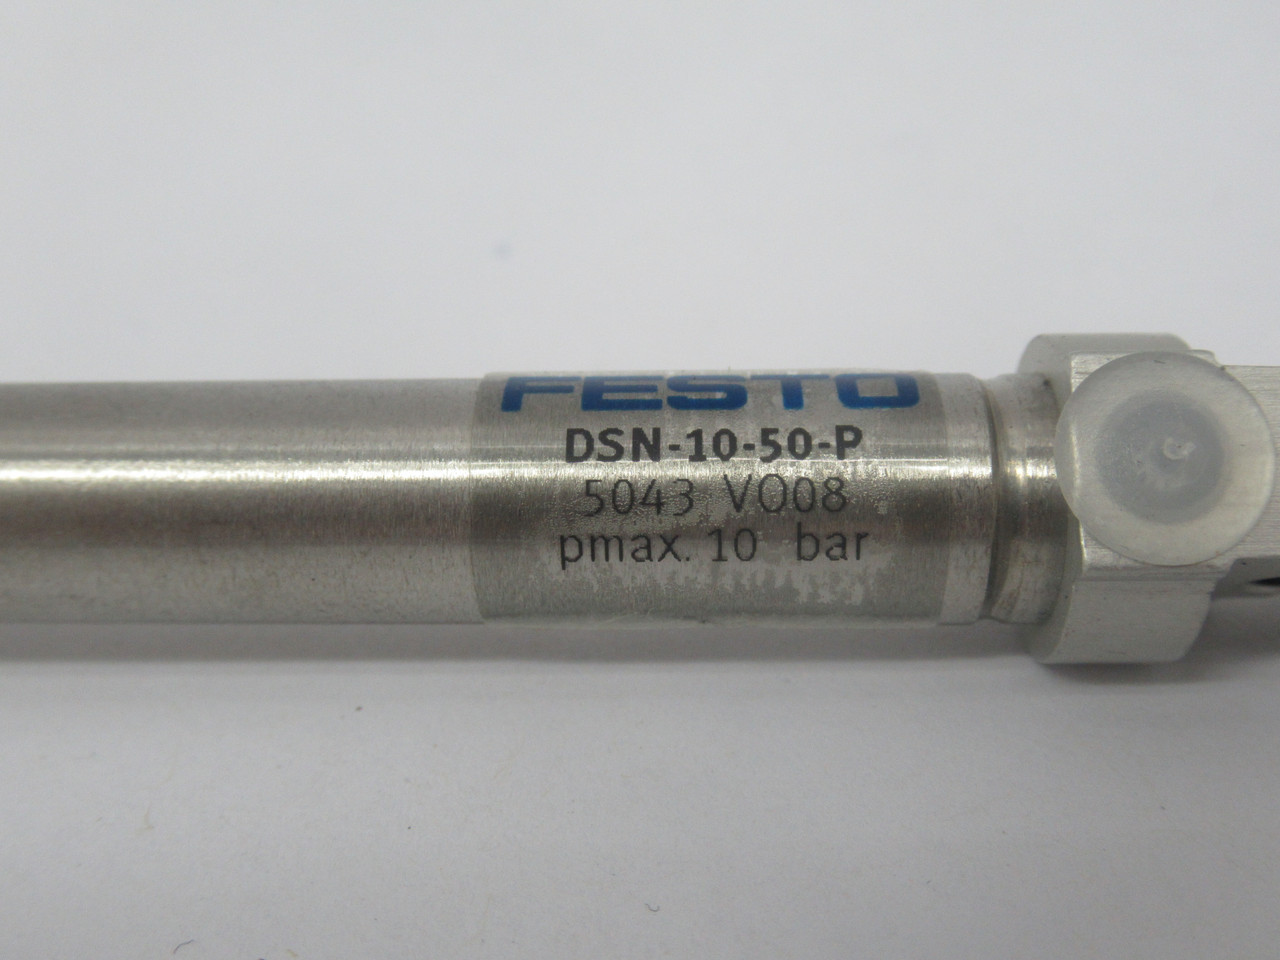 Festo 5043 DSN-10-50-P Mini Pneumatic Cylinder 10mm Bore 50mm Stroke NOP